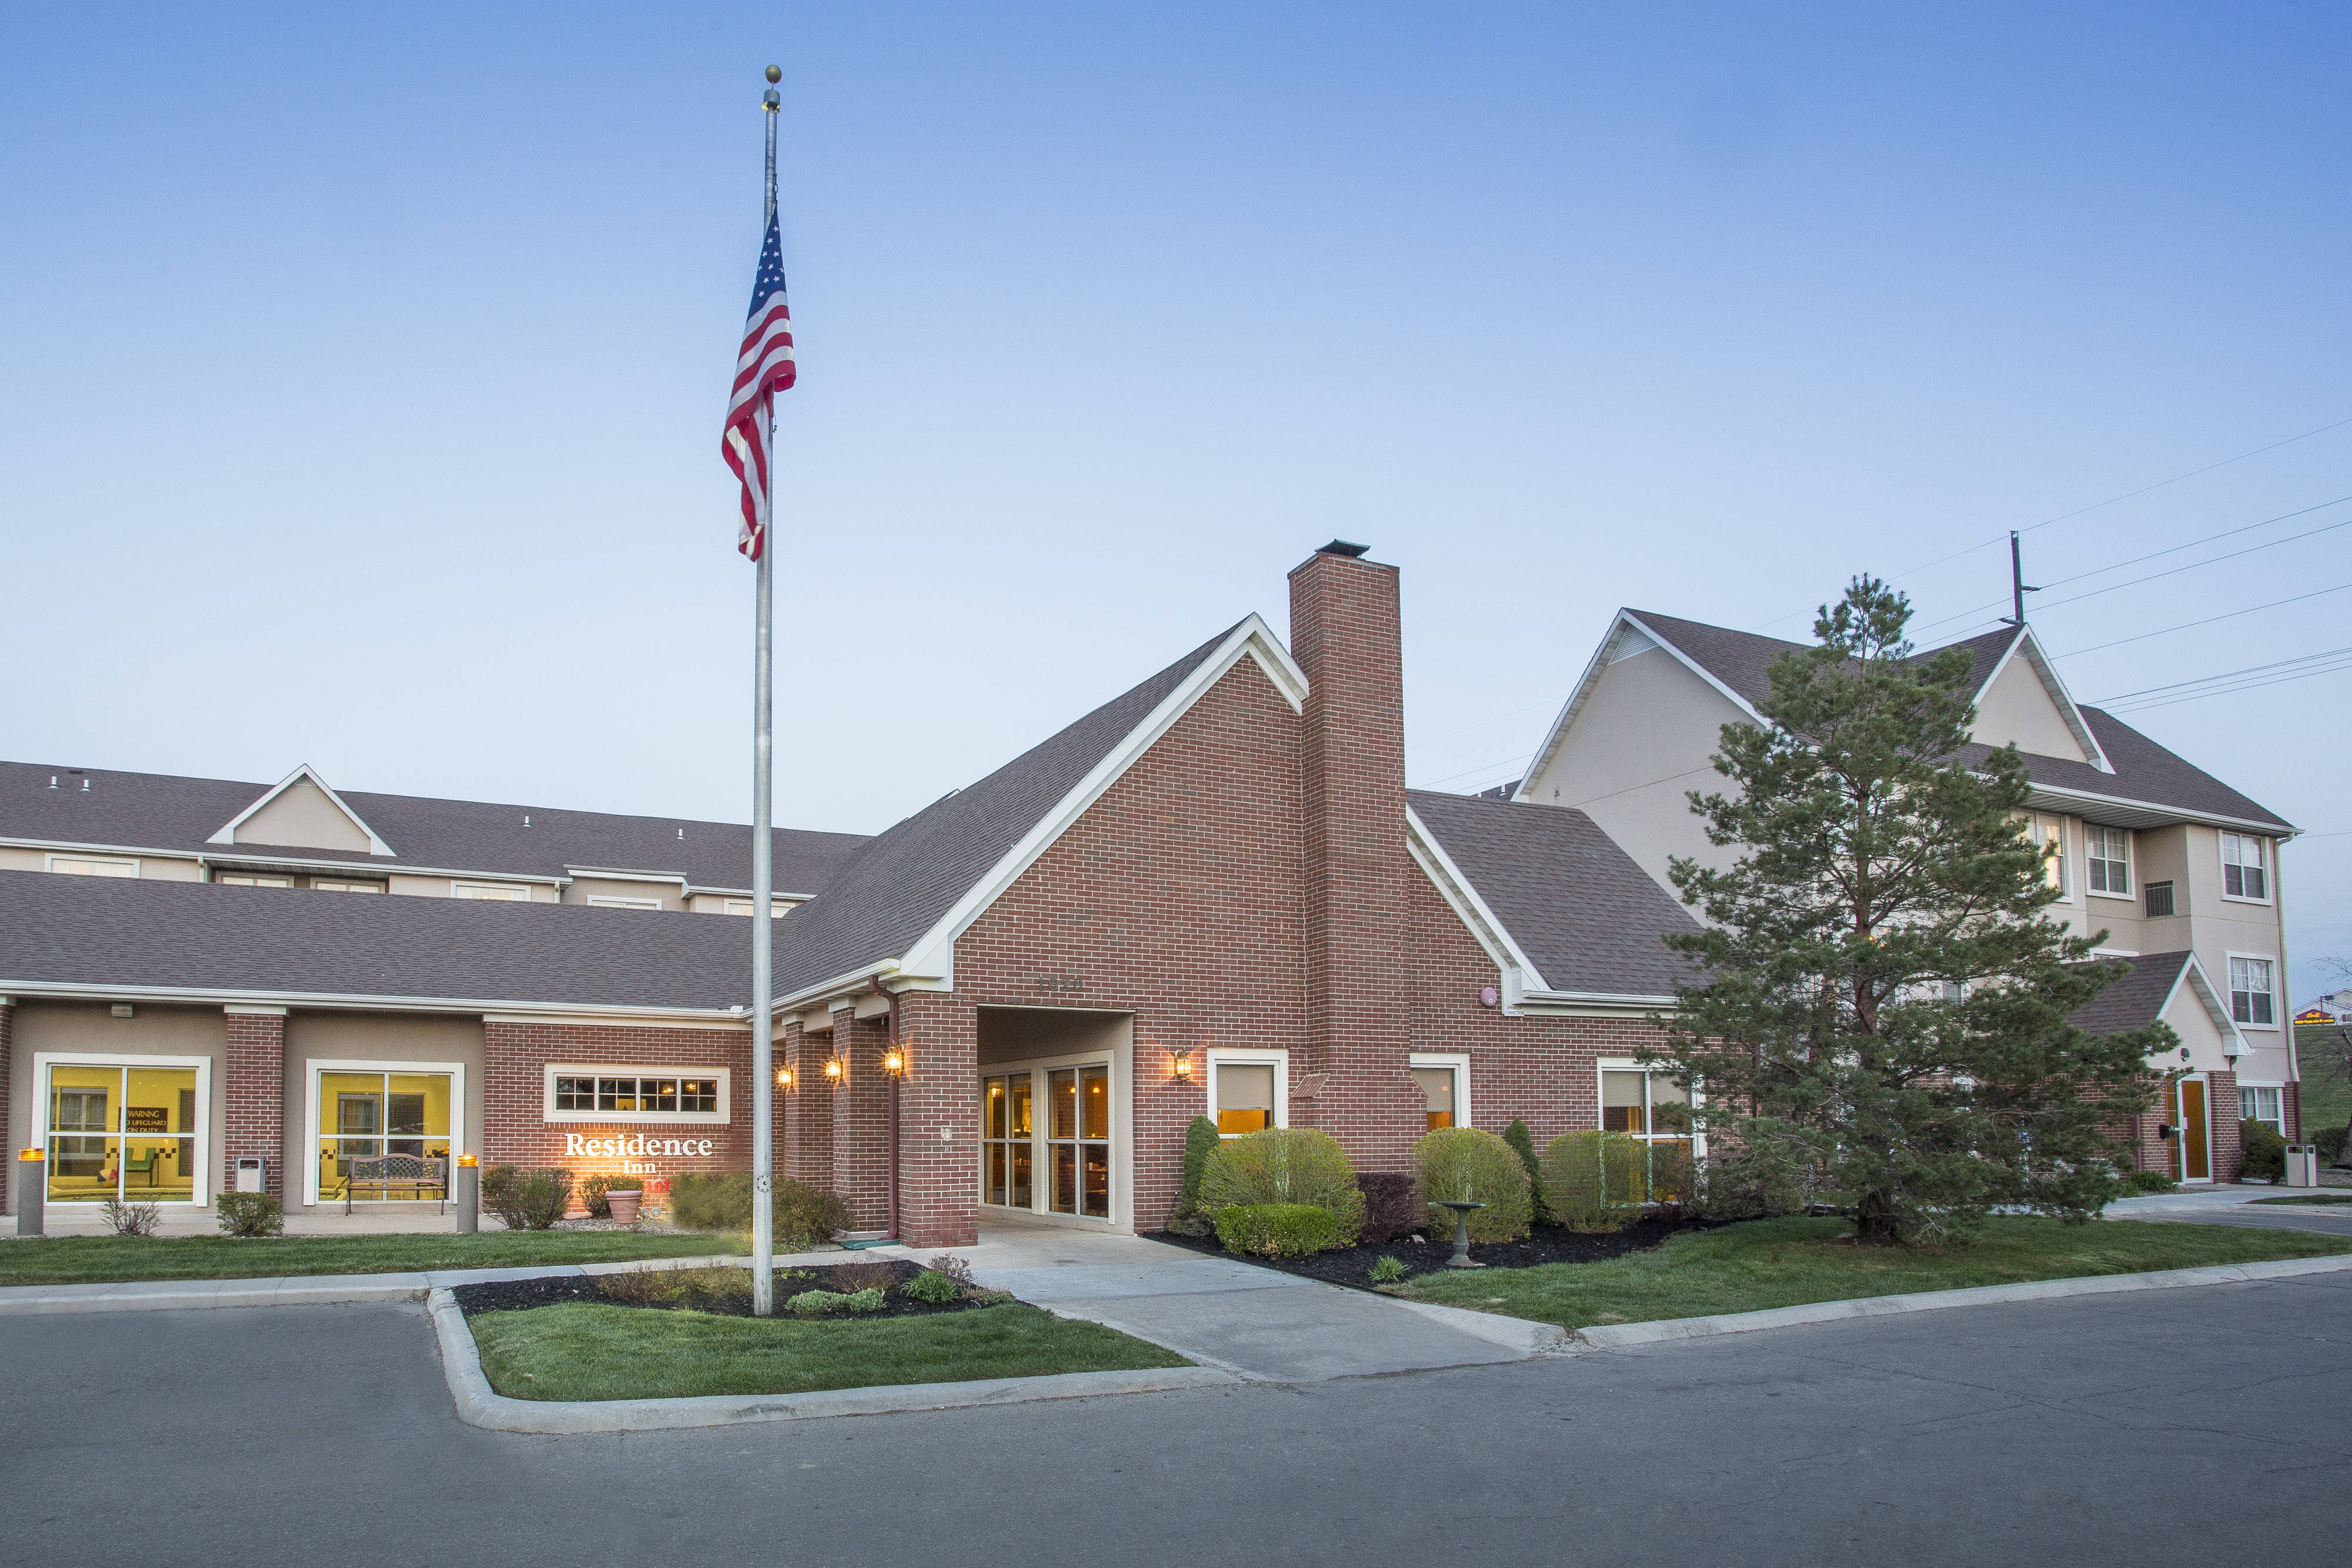 Photo of Residence Inn by Marriott Topeka, Topeka, KS